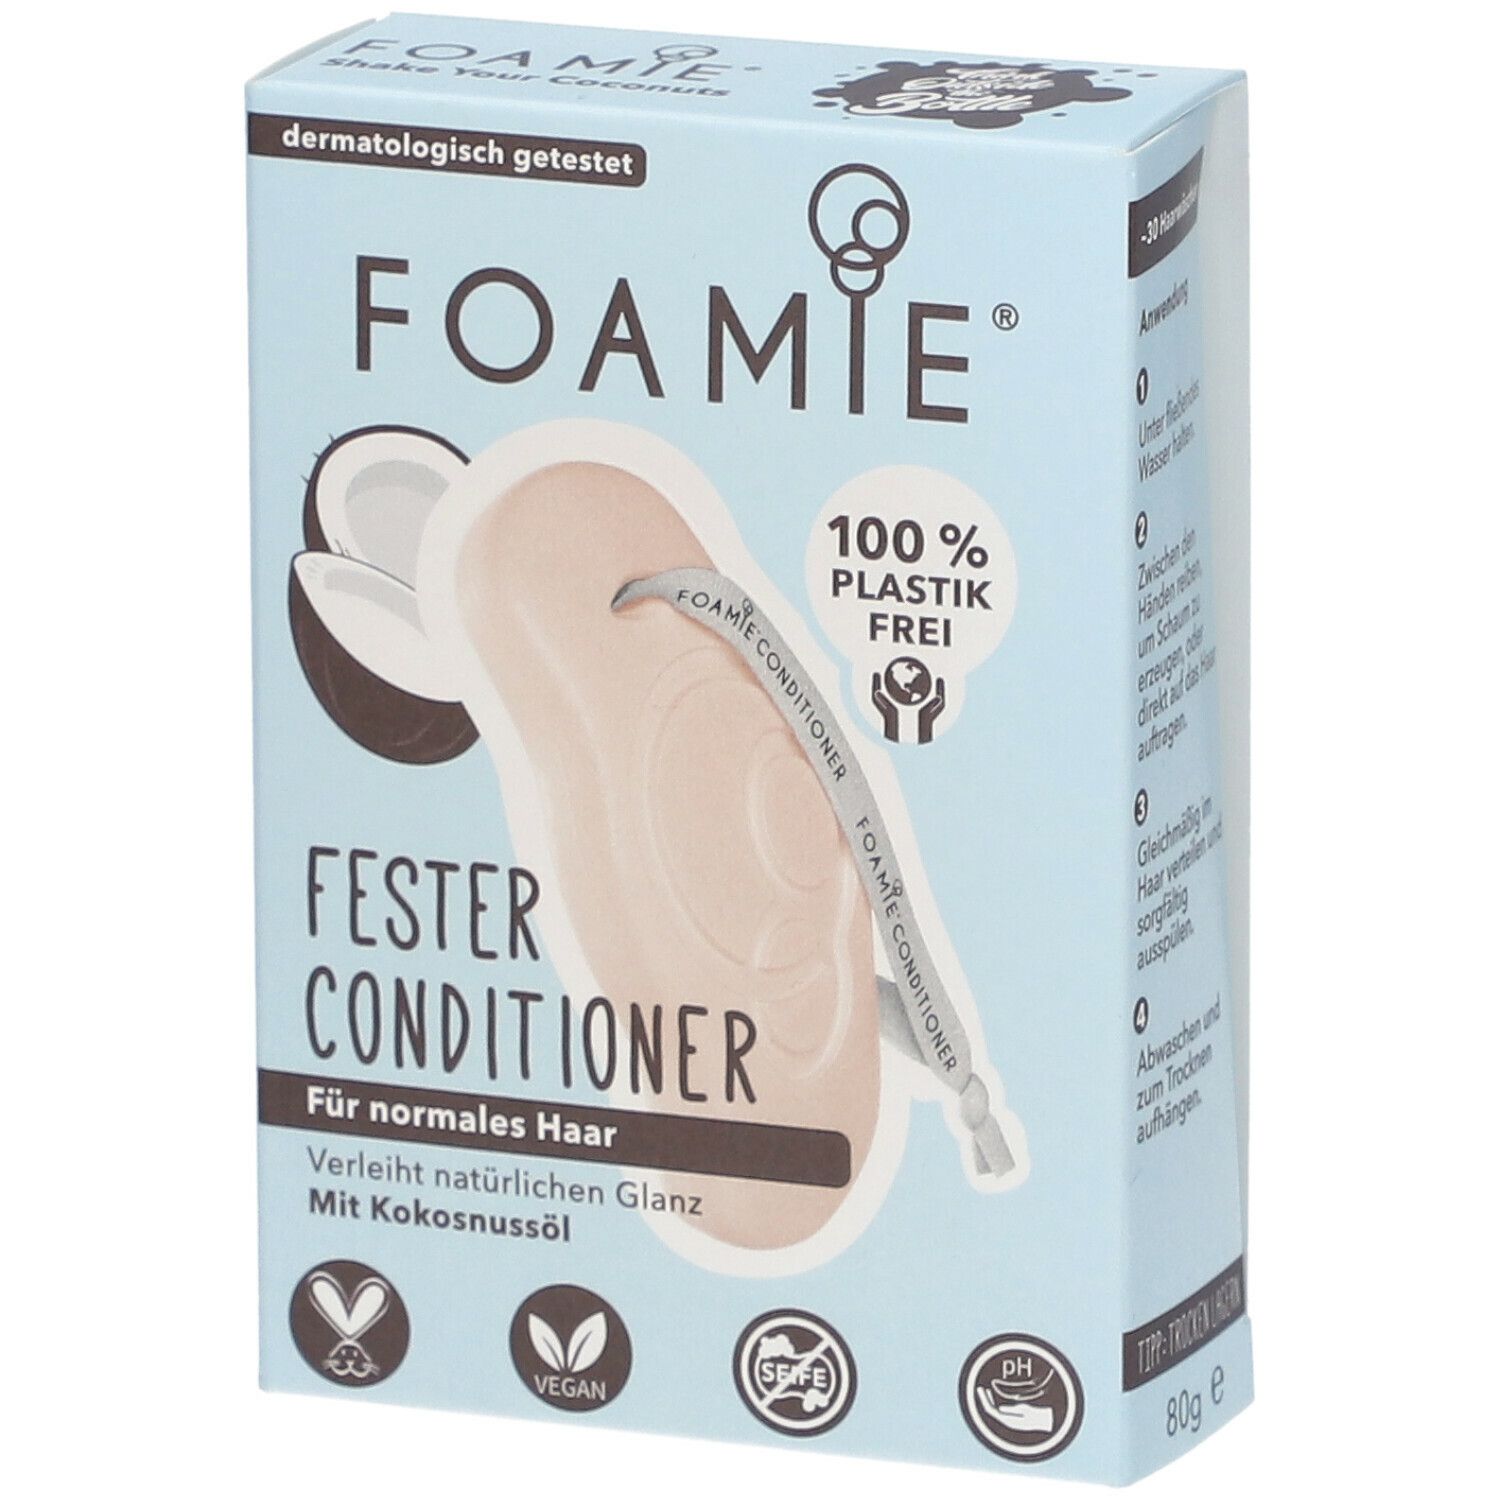 Image of FOAMIE® Fester Conditioner Kokosnussöl